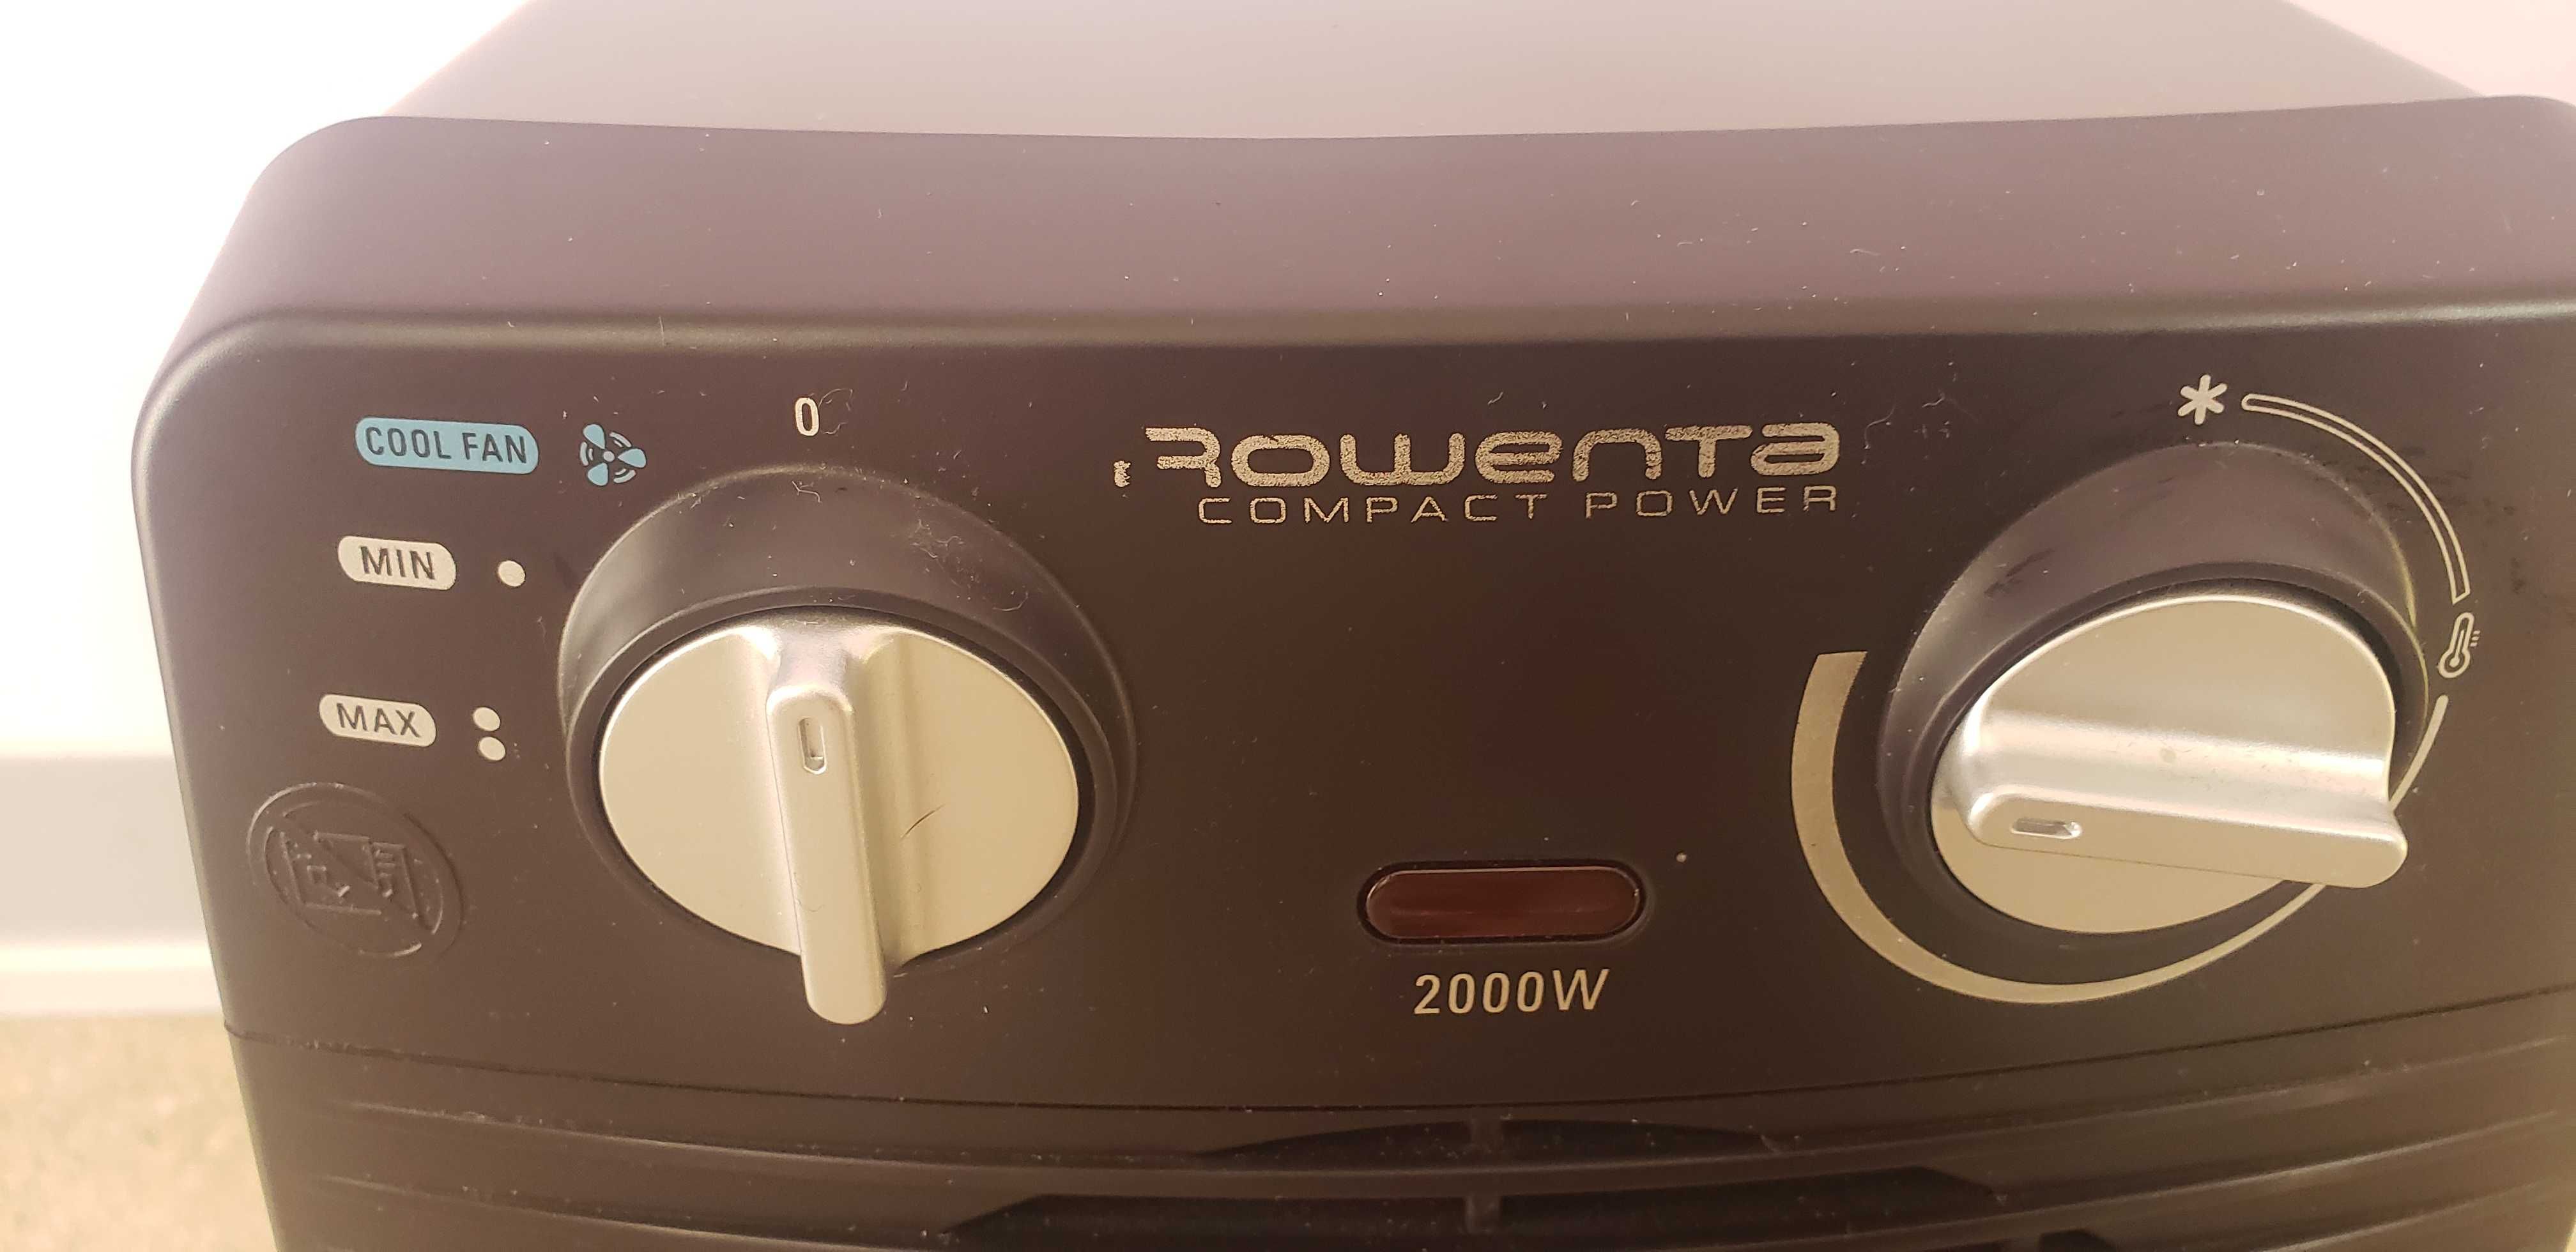 Rowenta compact power 2000w